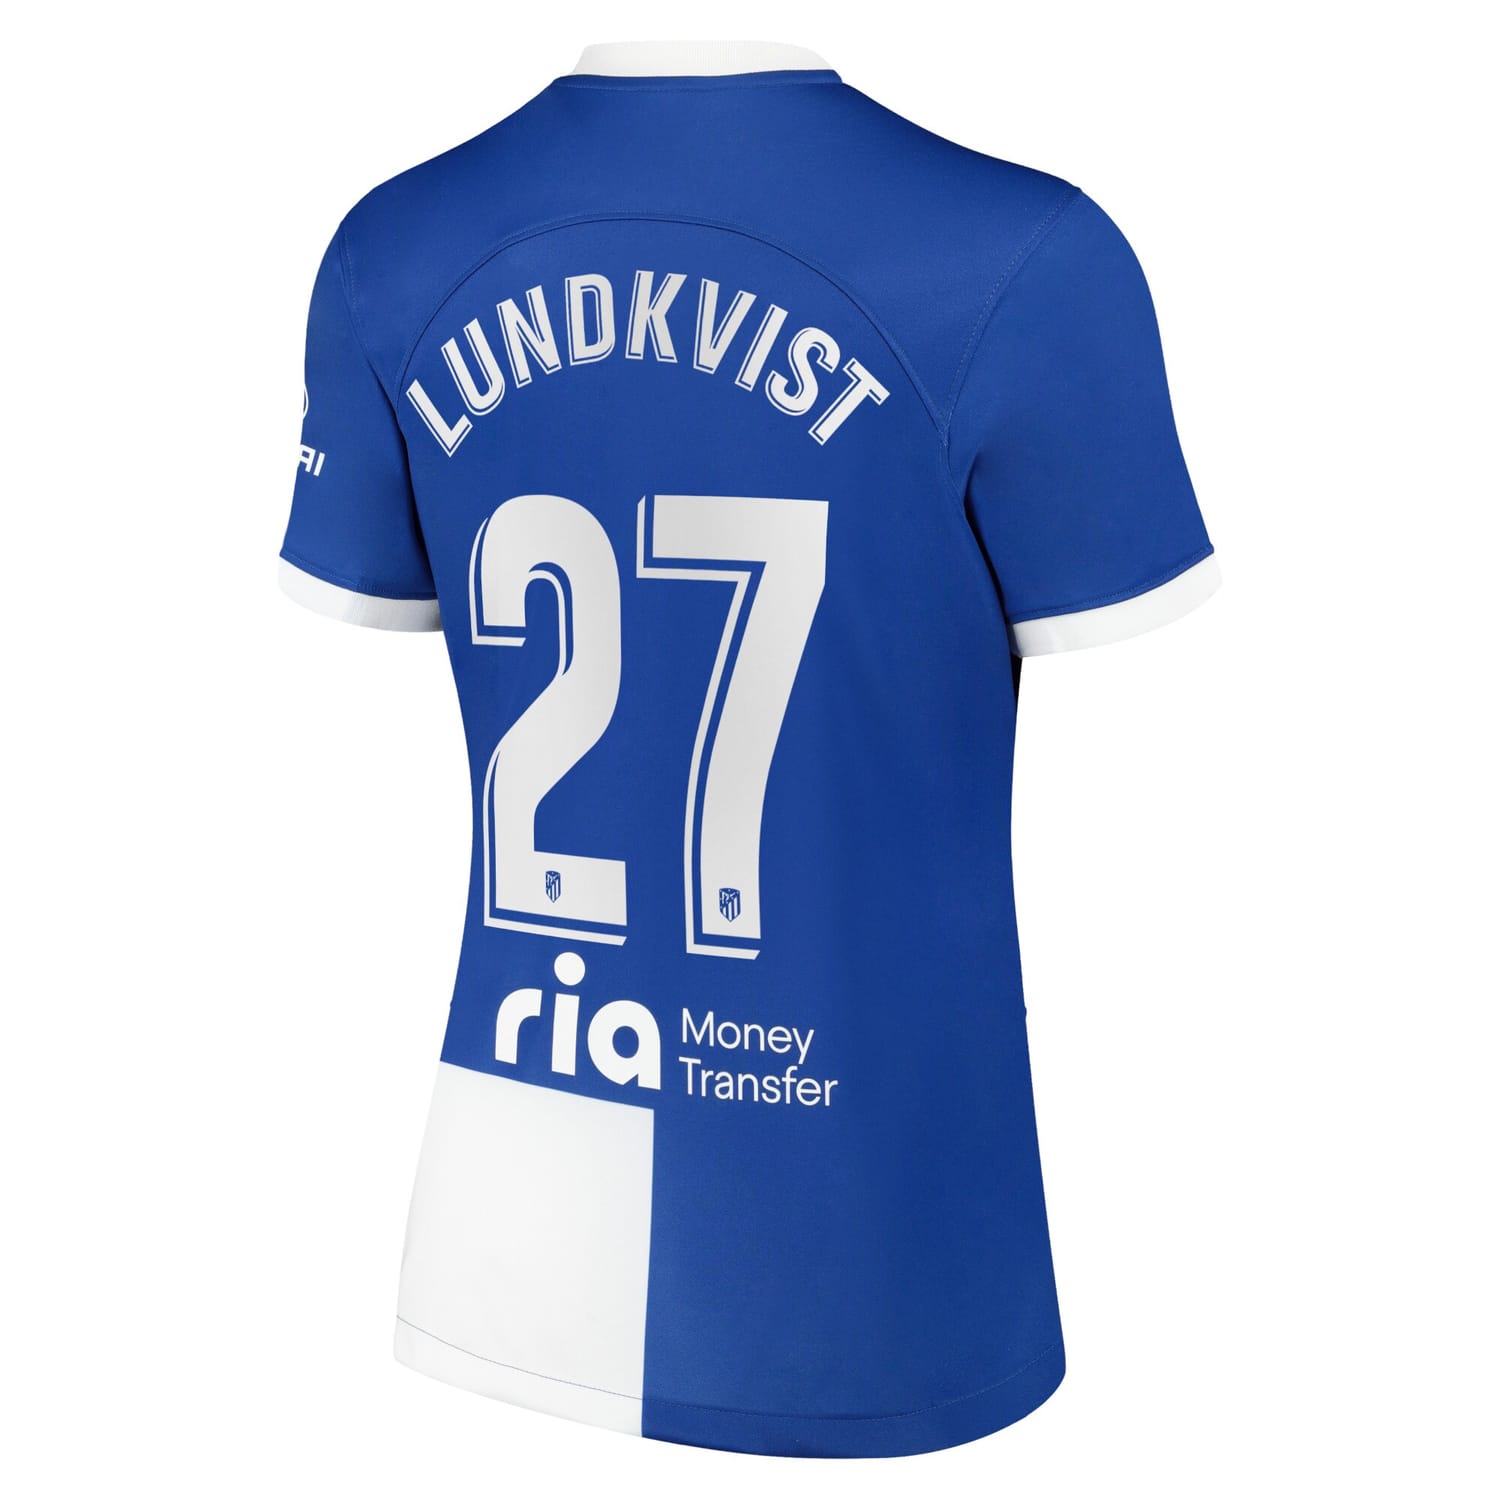 La Liga Atletico de Madrid Jersey Shirt 2022-23 player Hanna Lundkvist 27 printing for Women